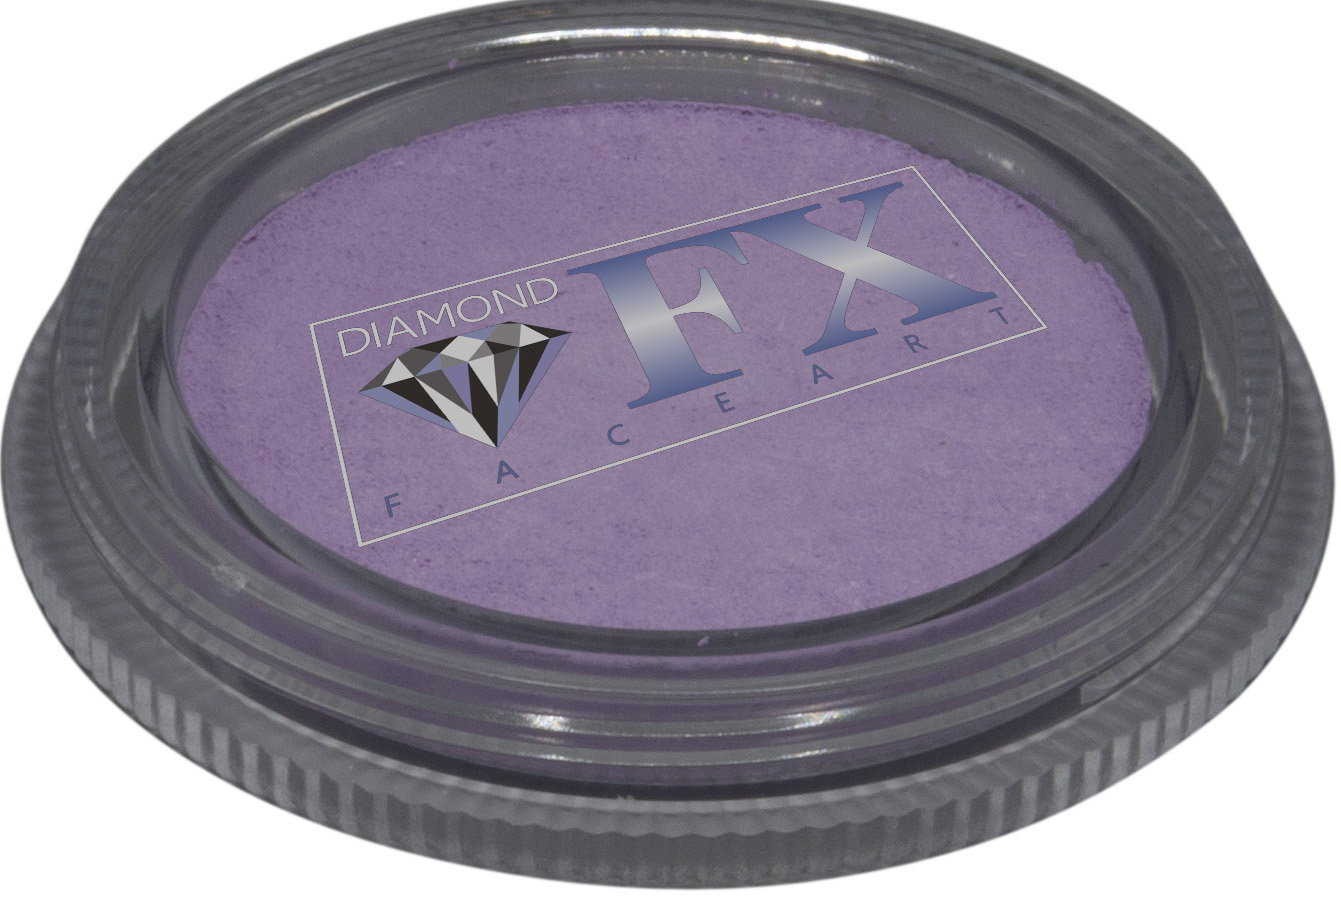 Diamond FX Lavender 30g - Small Image